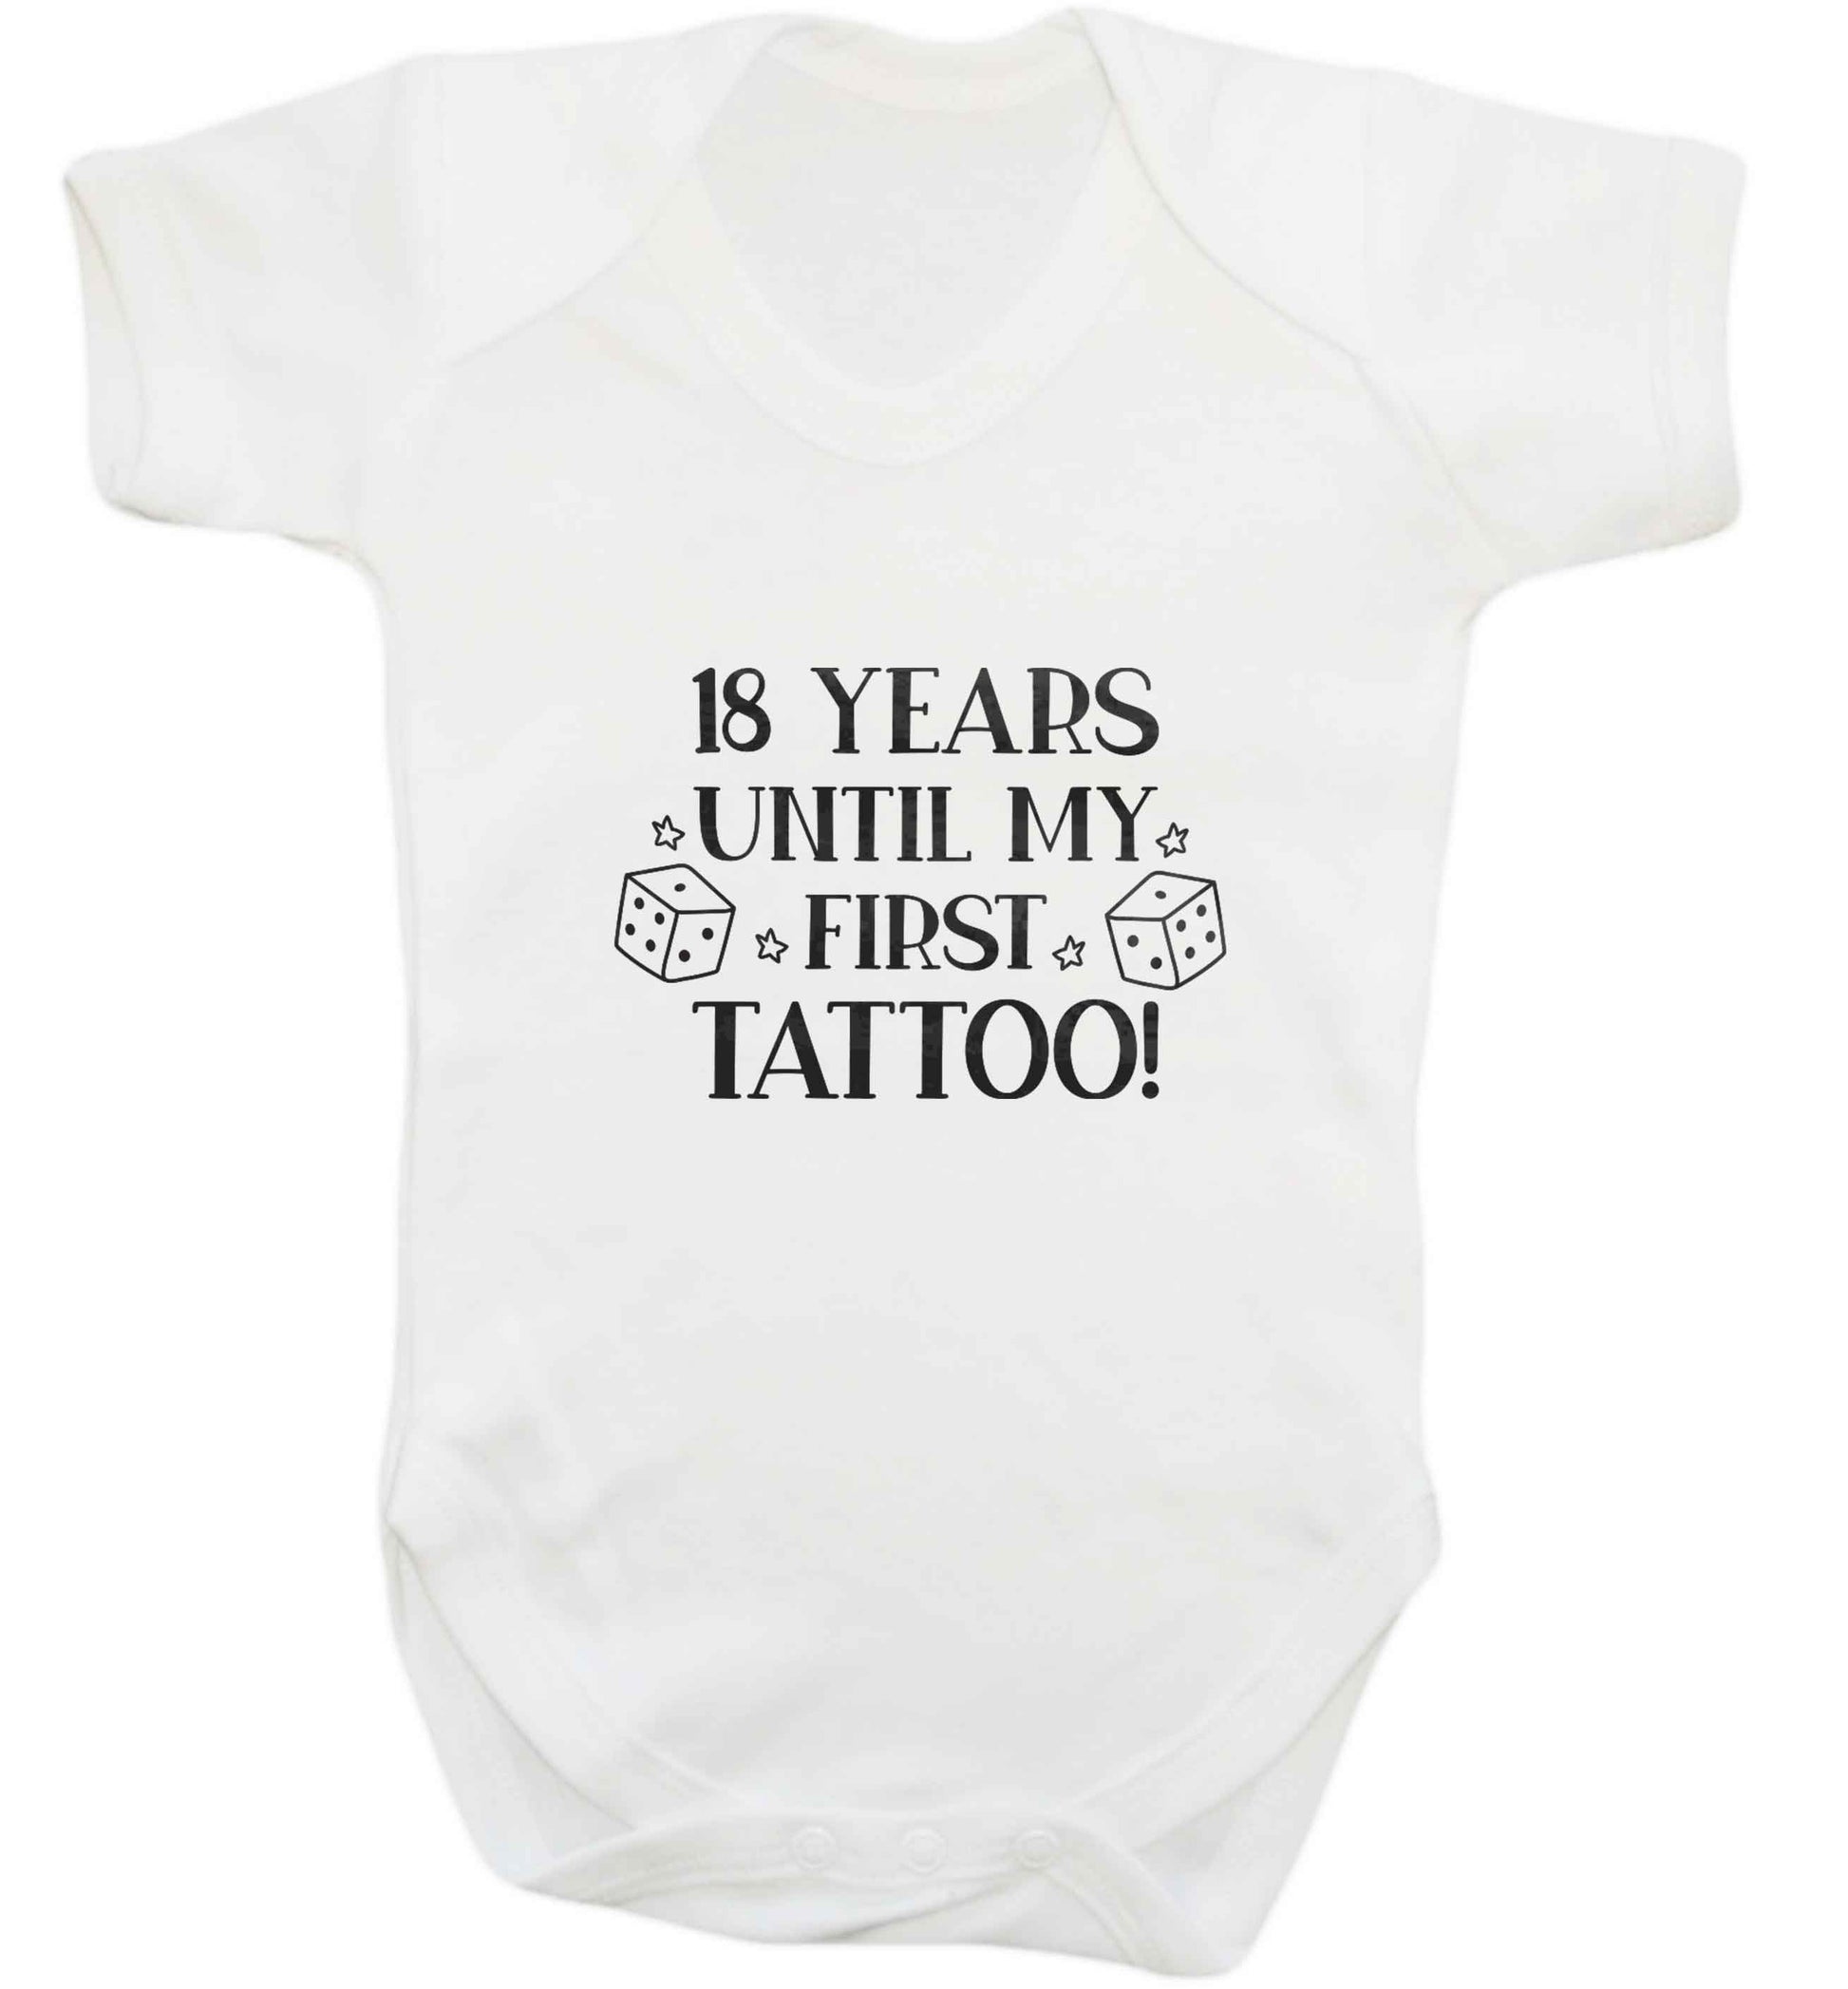 18 Years Until my First Tattoo baby vest white 18-24 months